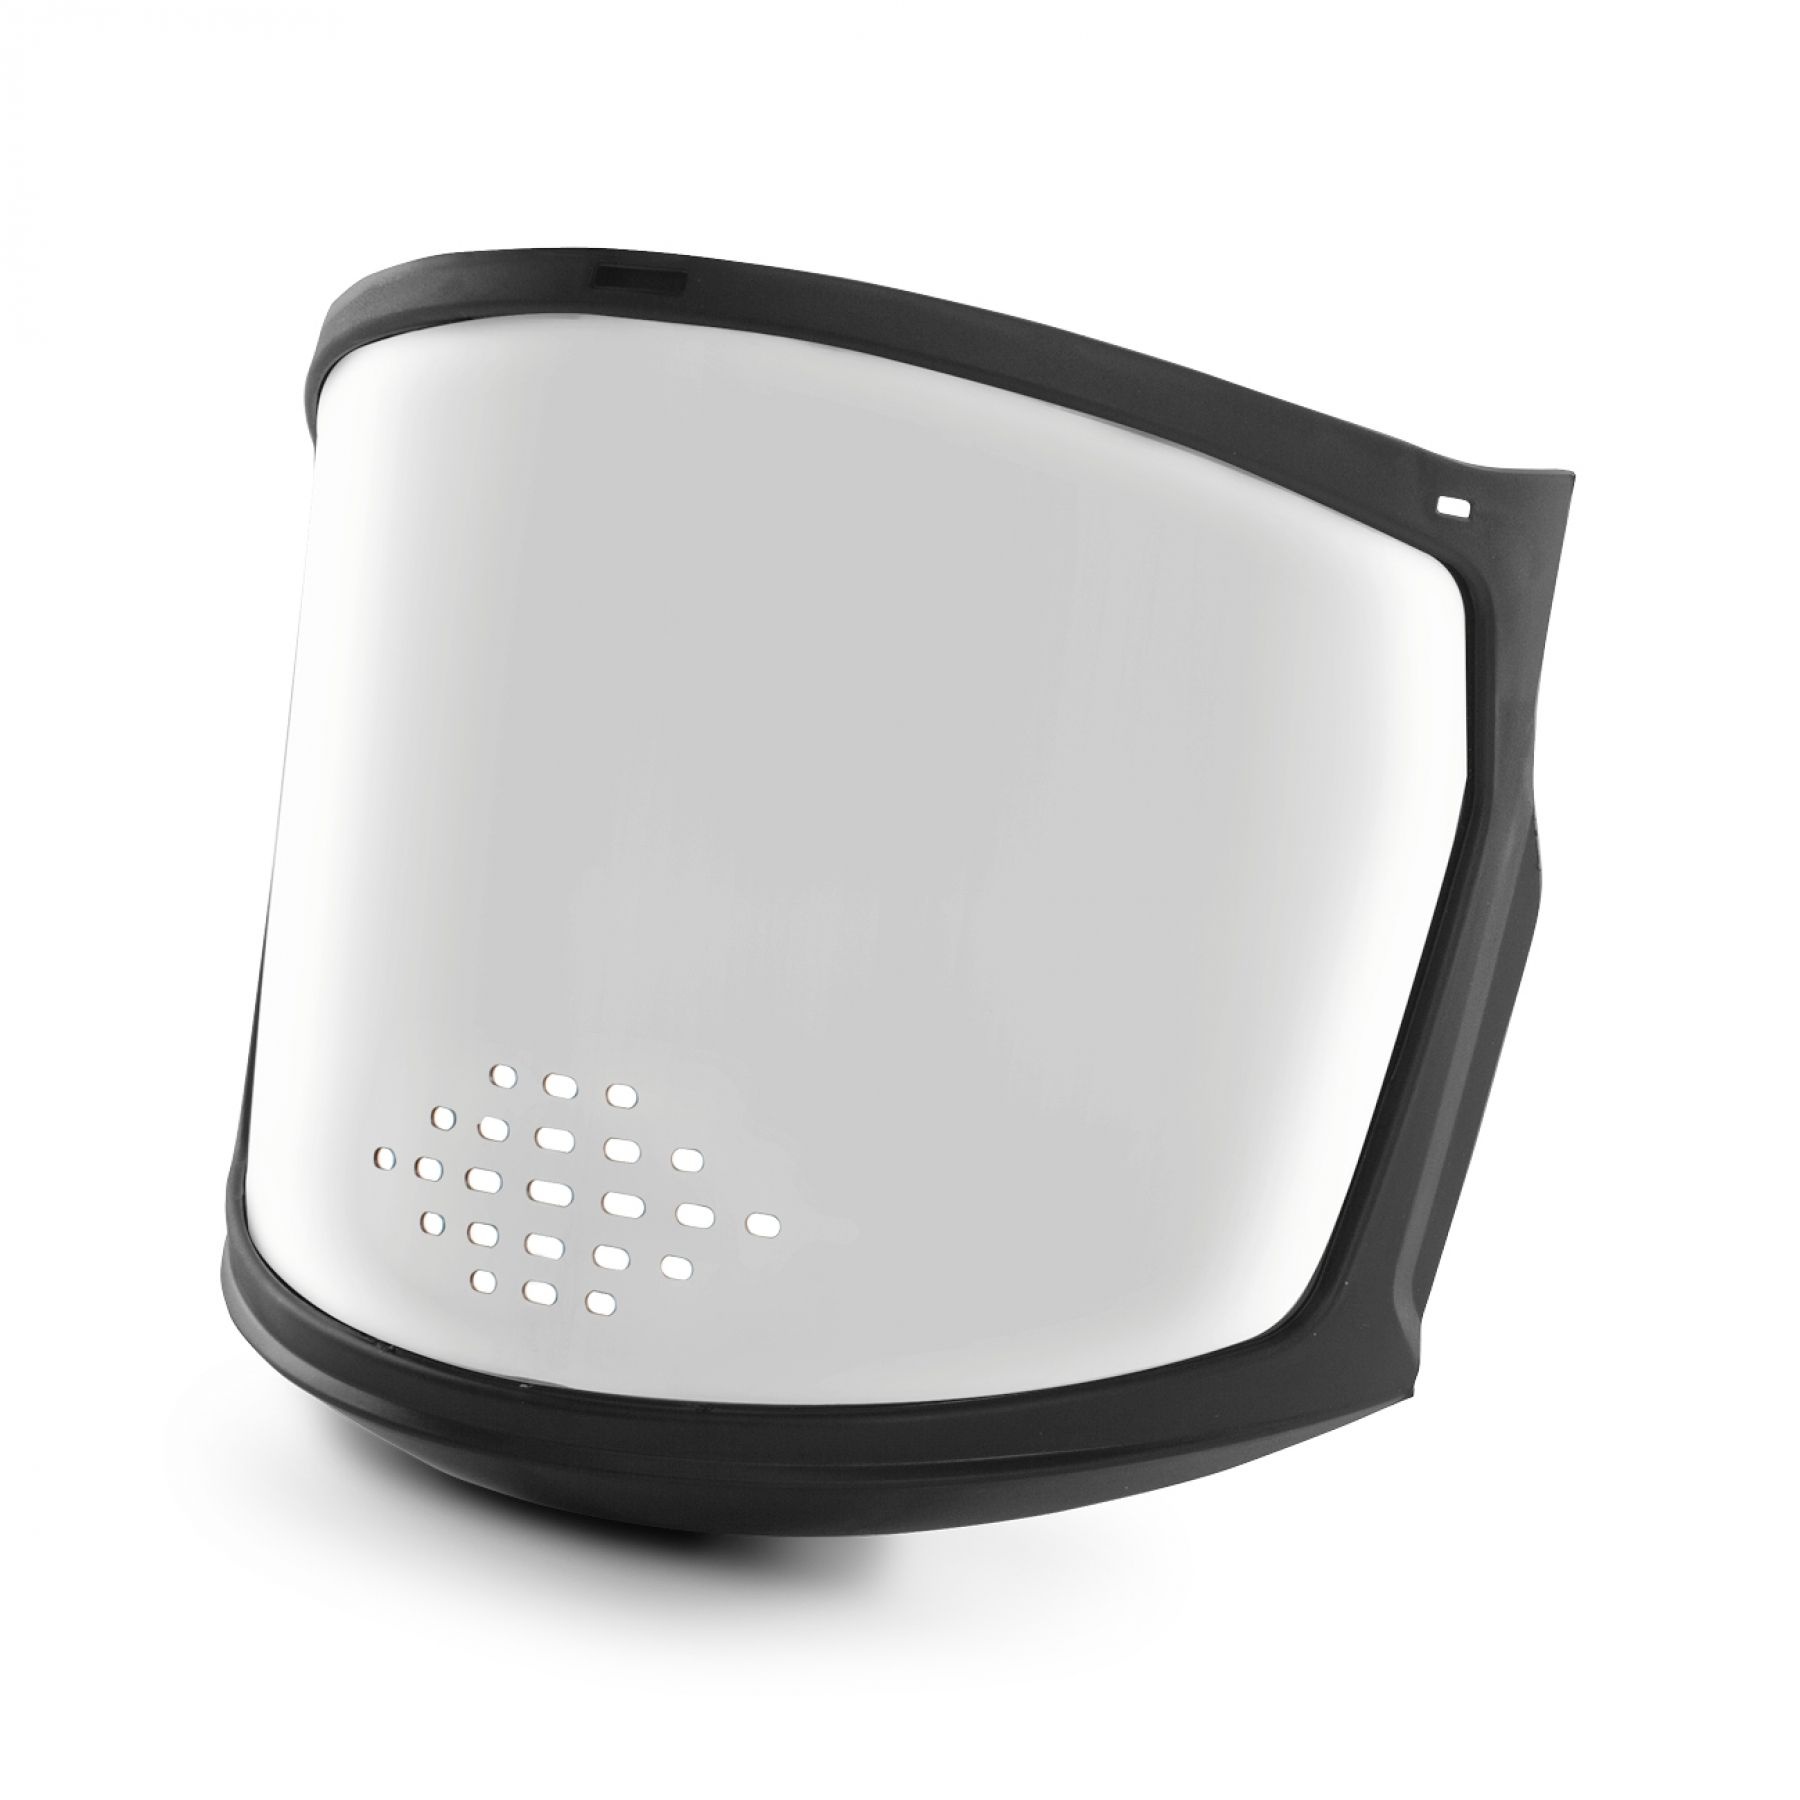 Kask Zen FF Air- Full Face Visor from GME Supply